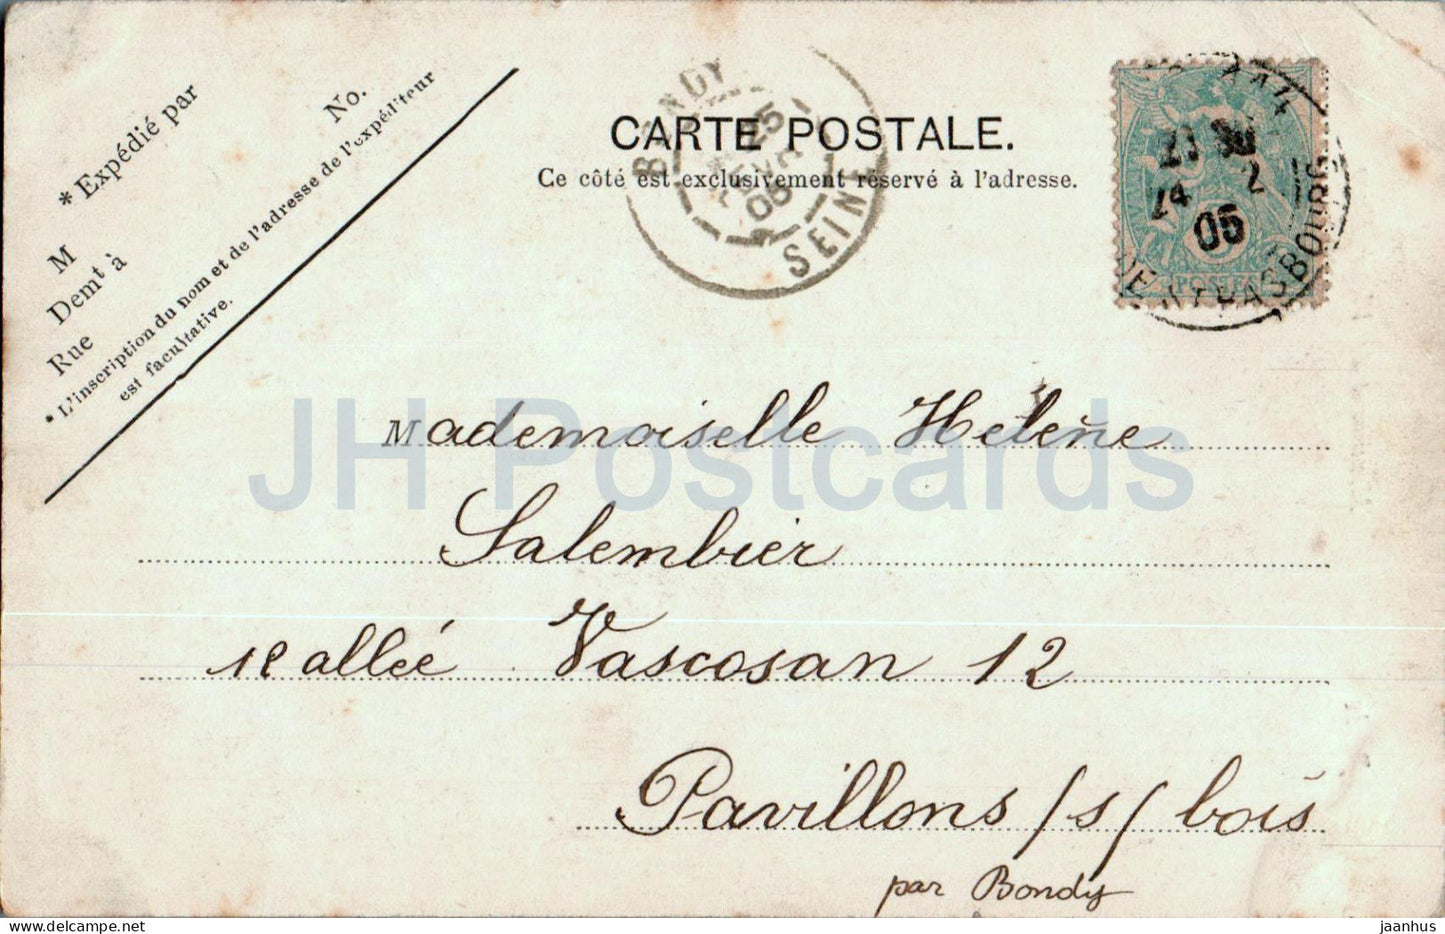 Paris - Monument de Victor Hugo - Denkmal - 32 - alte Postkarte - 1905 - Frankreich - gebraucht 